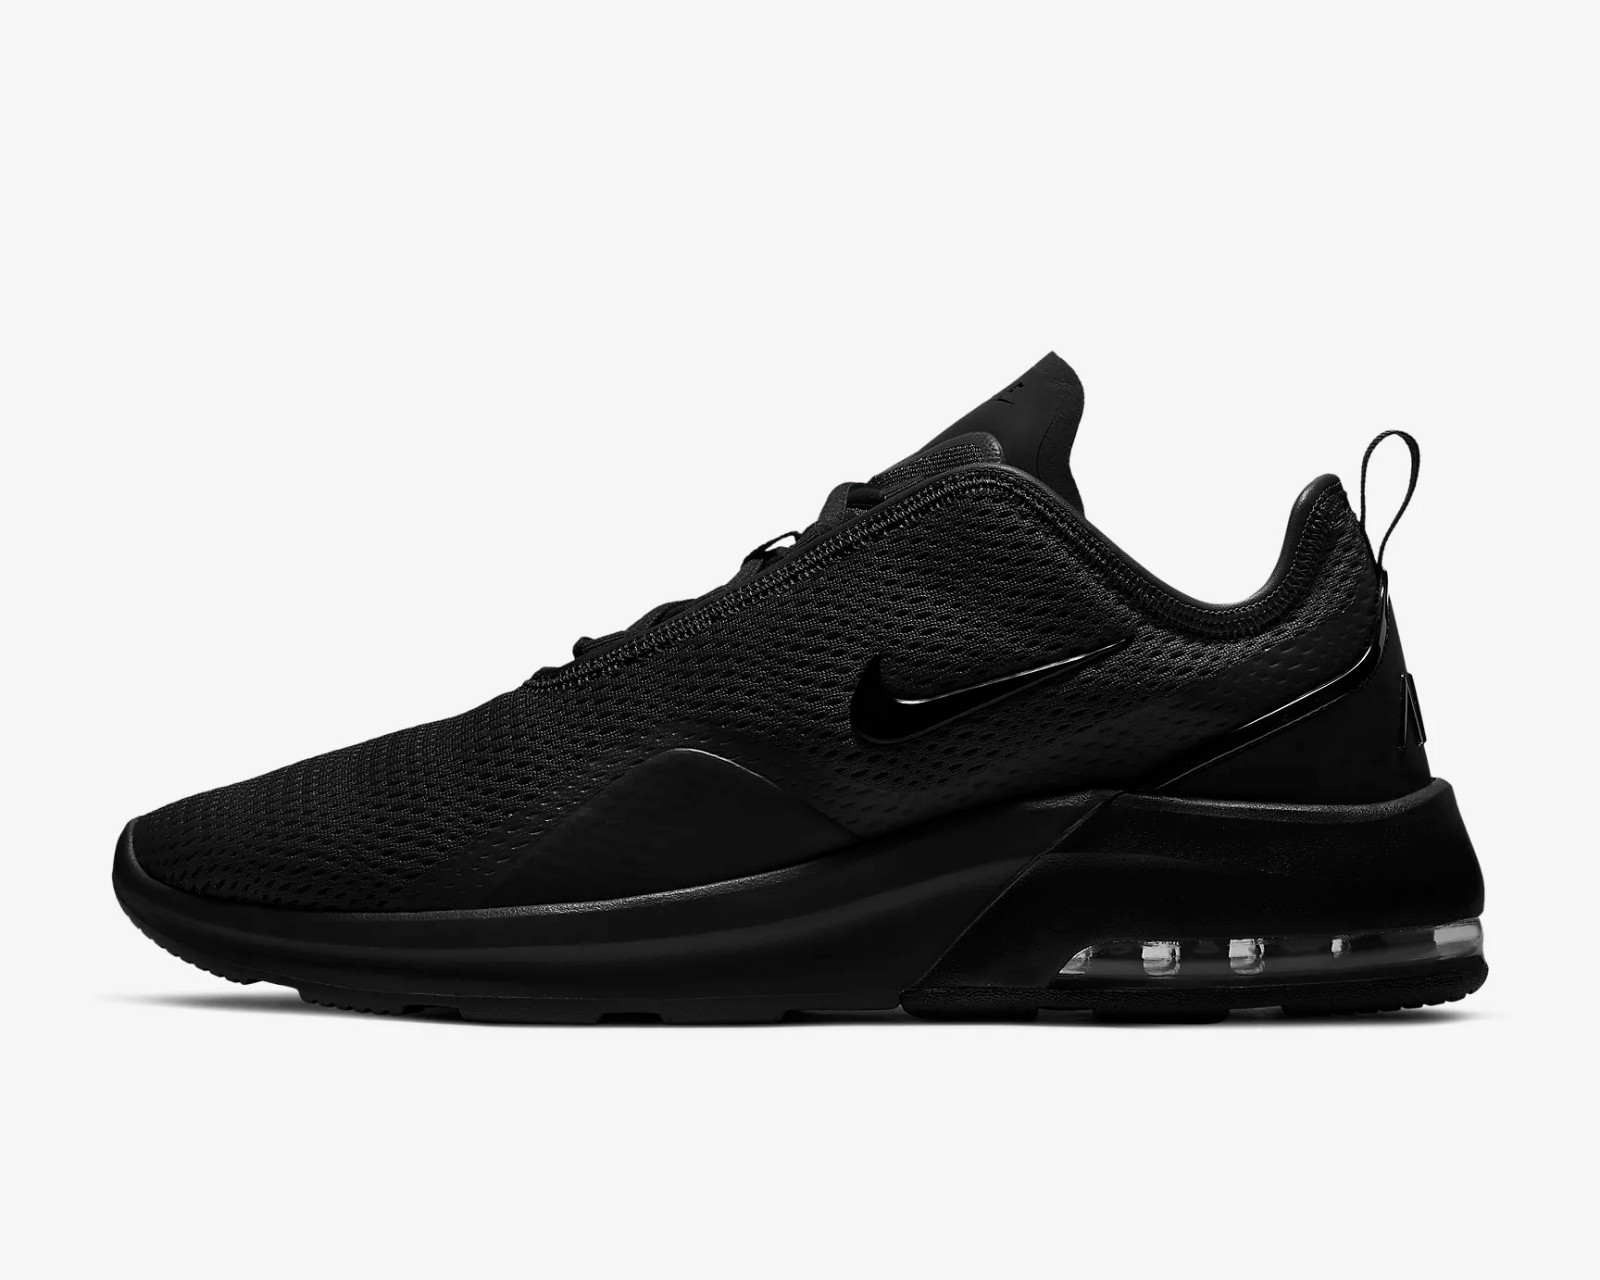 004 - encantan las Dualtone de Nike y estas por 55 euros una pasada - Nike Air Max Motion 2 Black Anthracite Running Shoes A00266 - Ariss-euShops